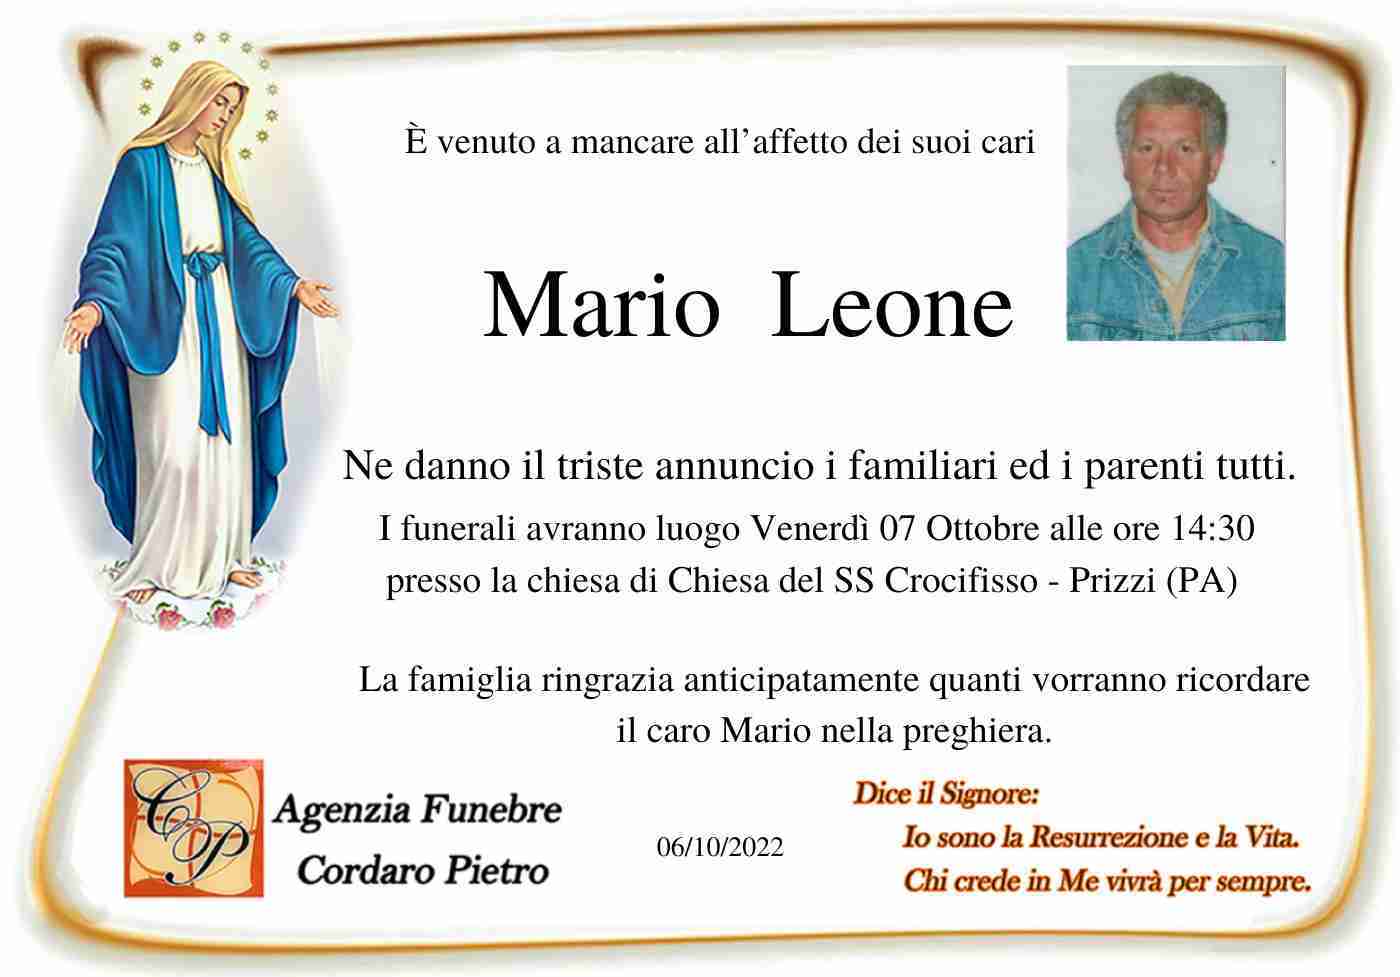 Mario Leone